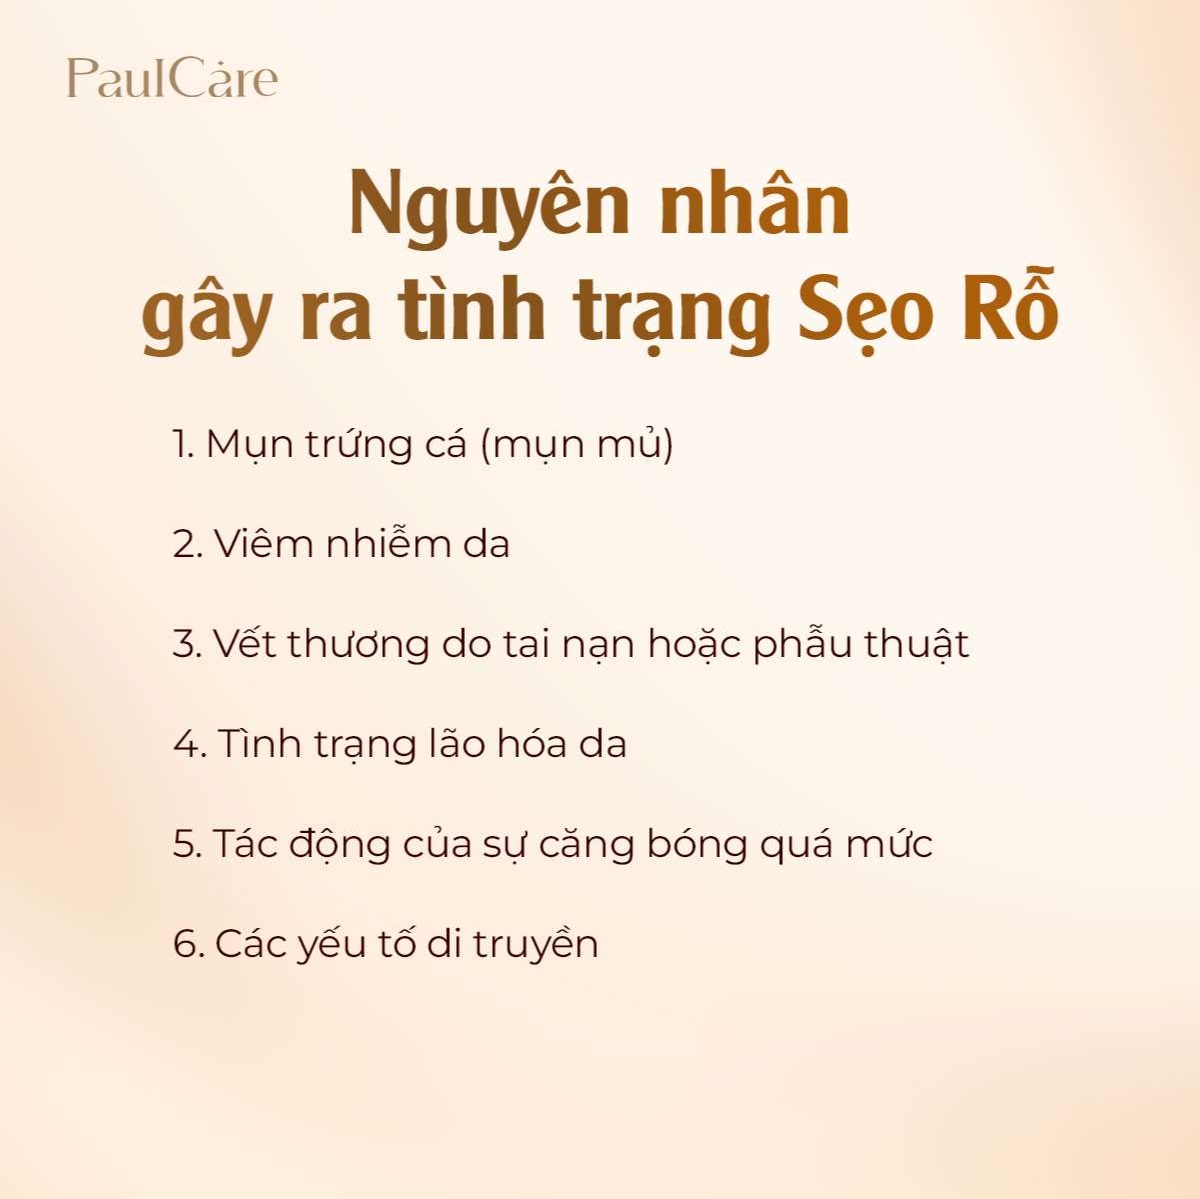 Nguyen_nhan_gay_ra_seo_ro_tham_my_vien_paulcare